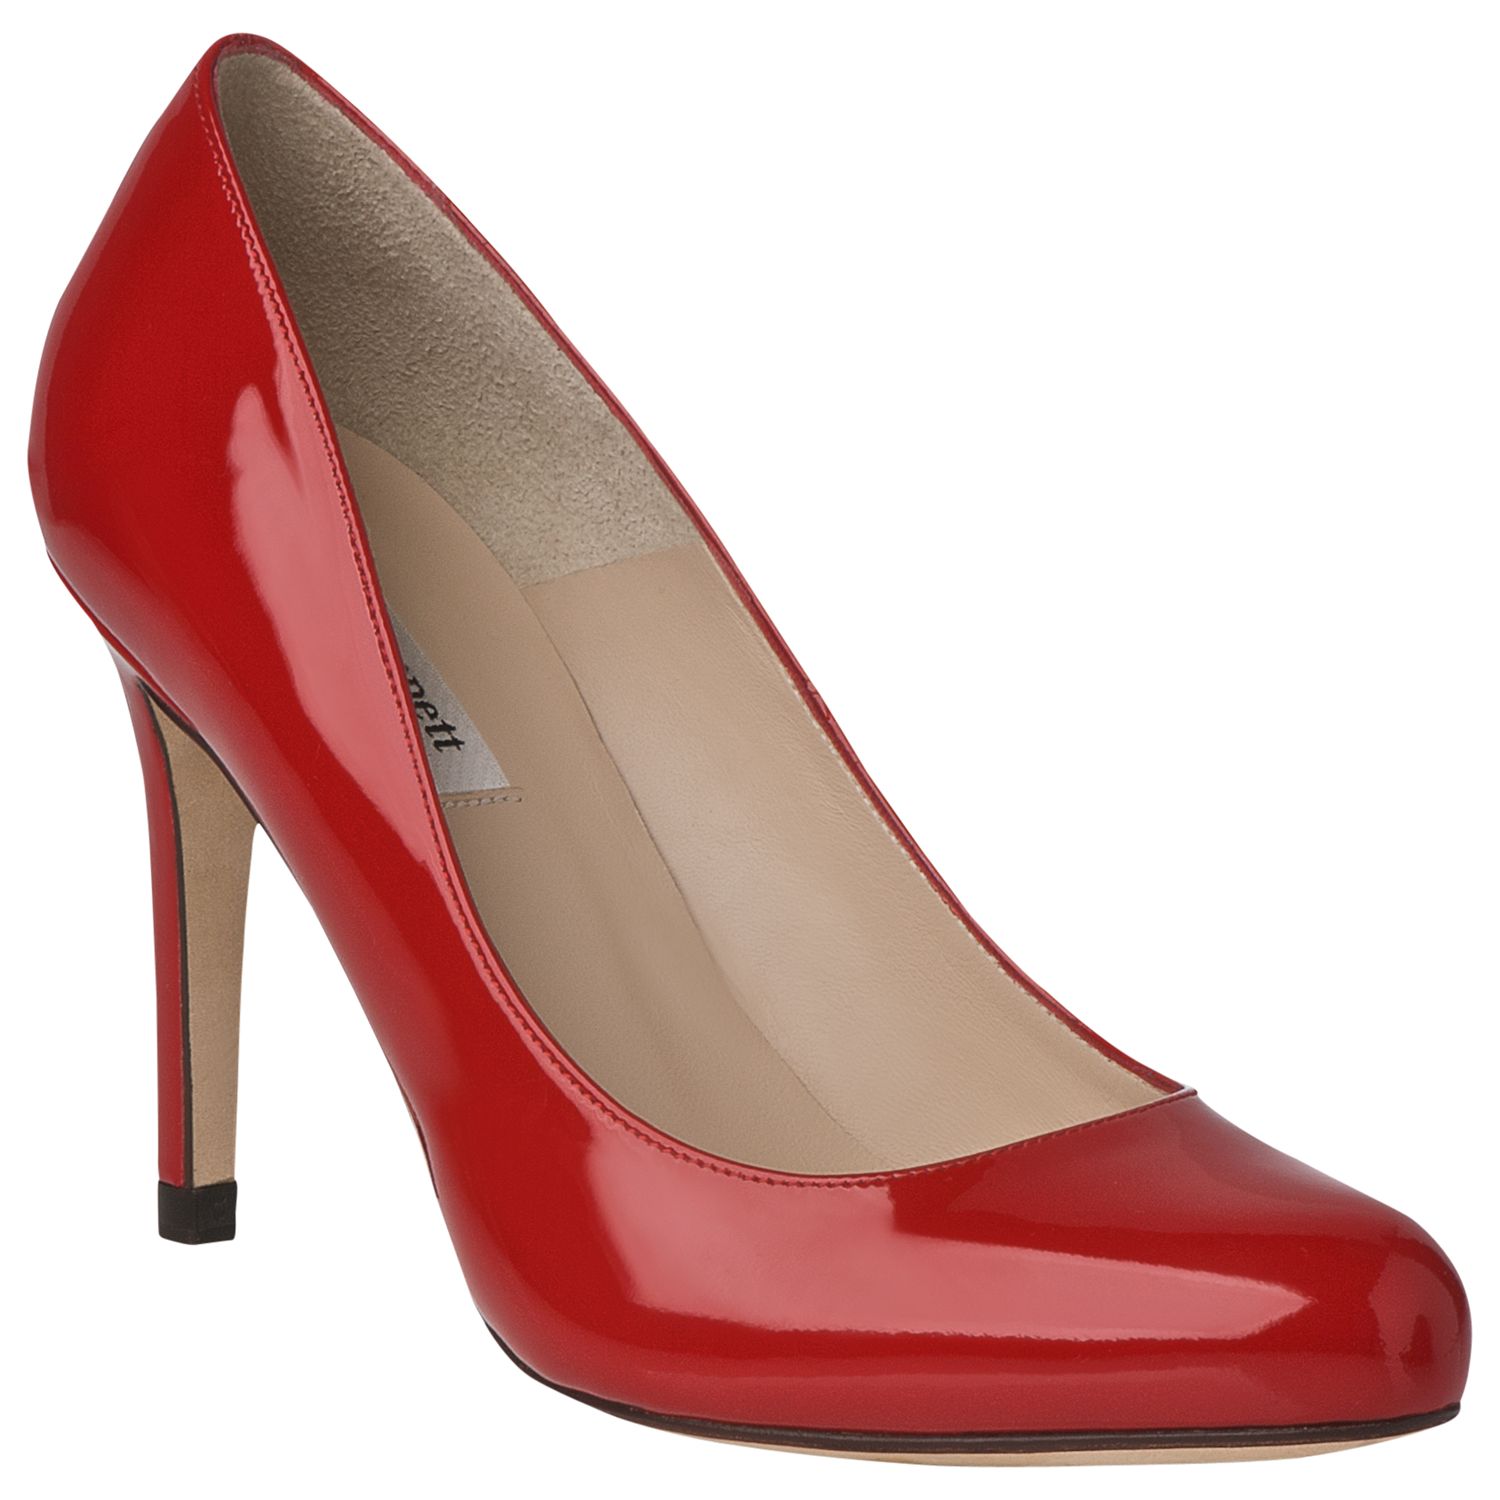 L.K. Bennett Stila Leather Court Shoes, Salsa Red Patent at John Lewis & Partners